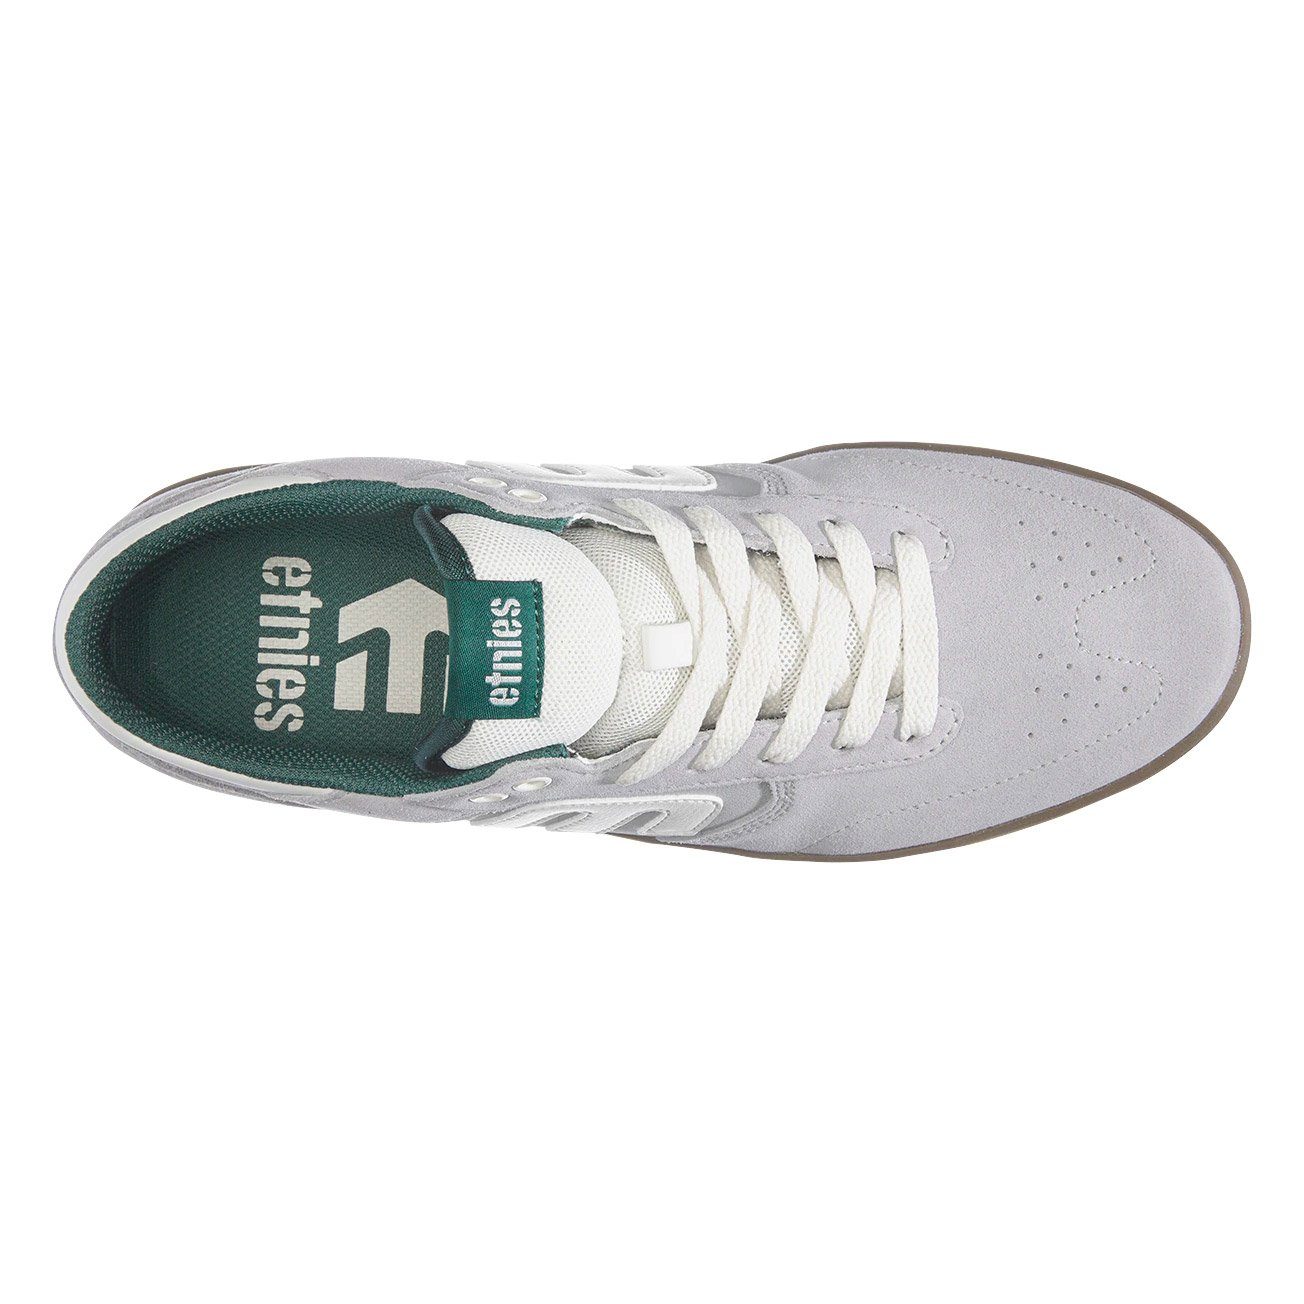 Windrow Sneaker - grey/white/gum etnies